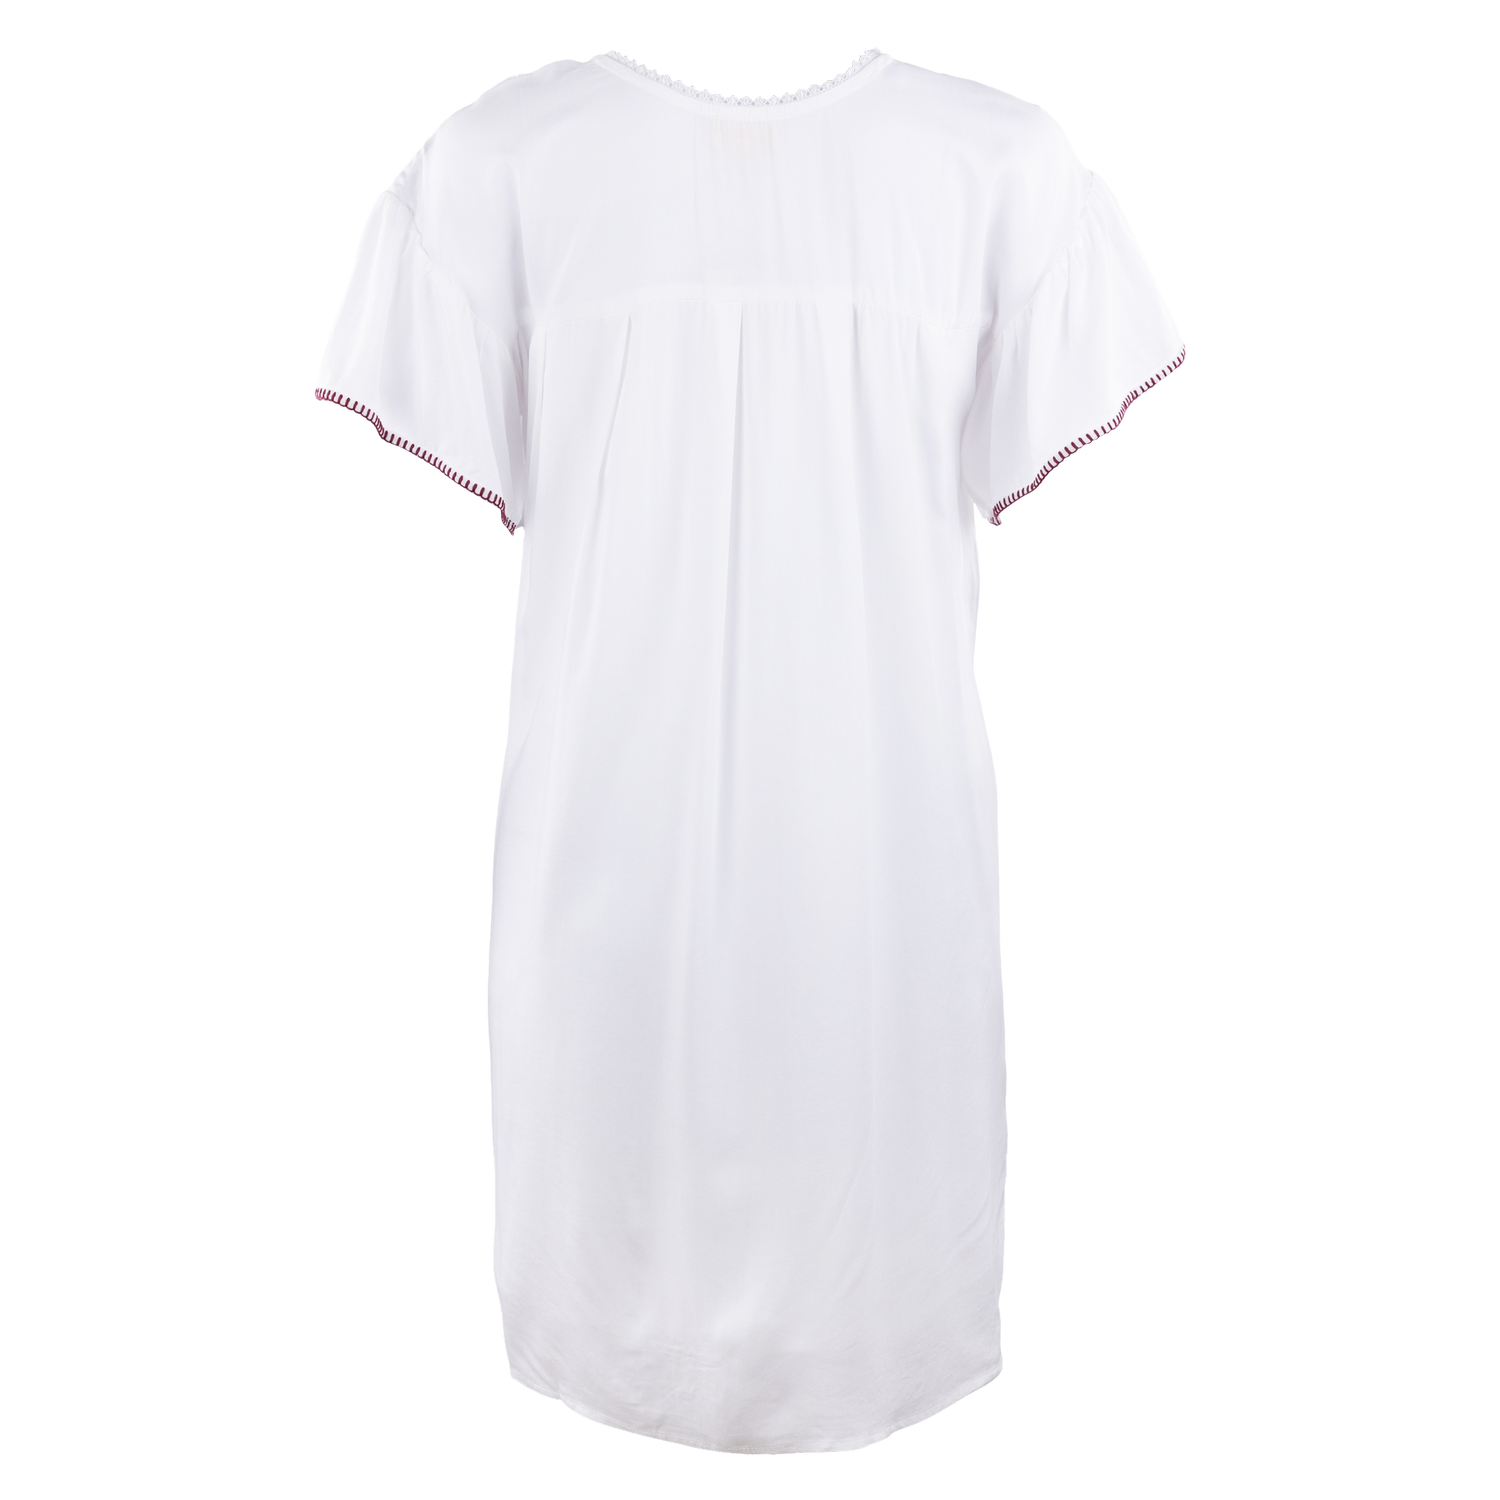 Layerz White Dress Maroon Embroidery